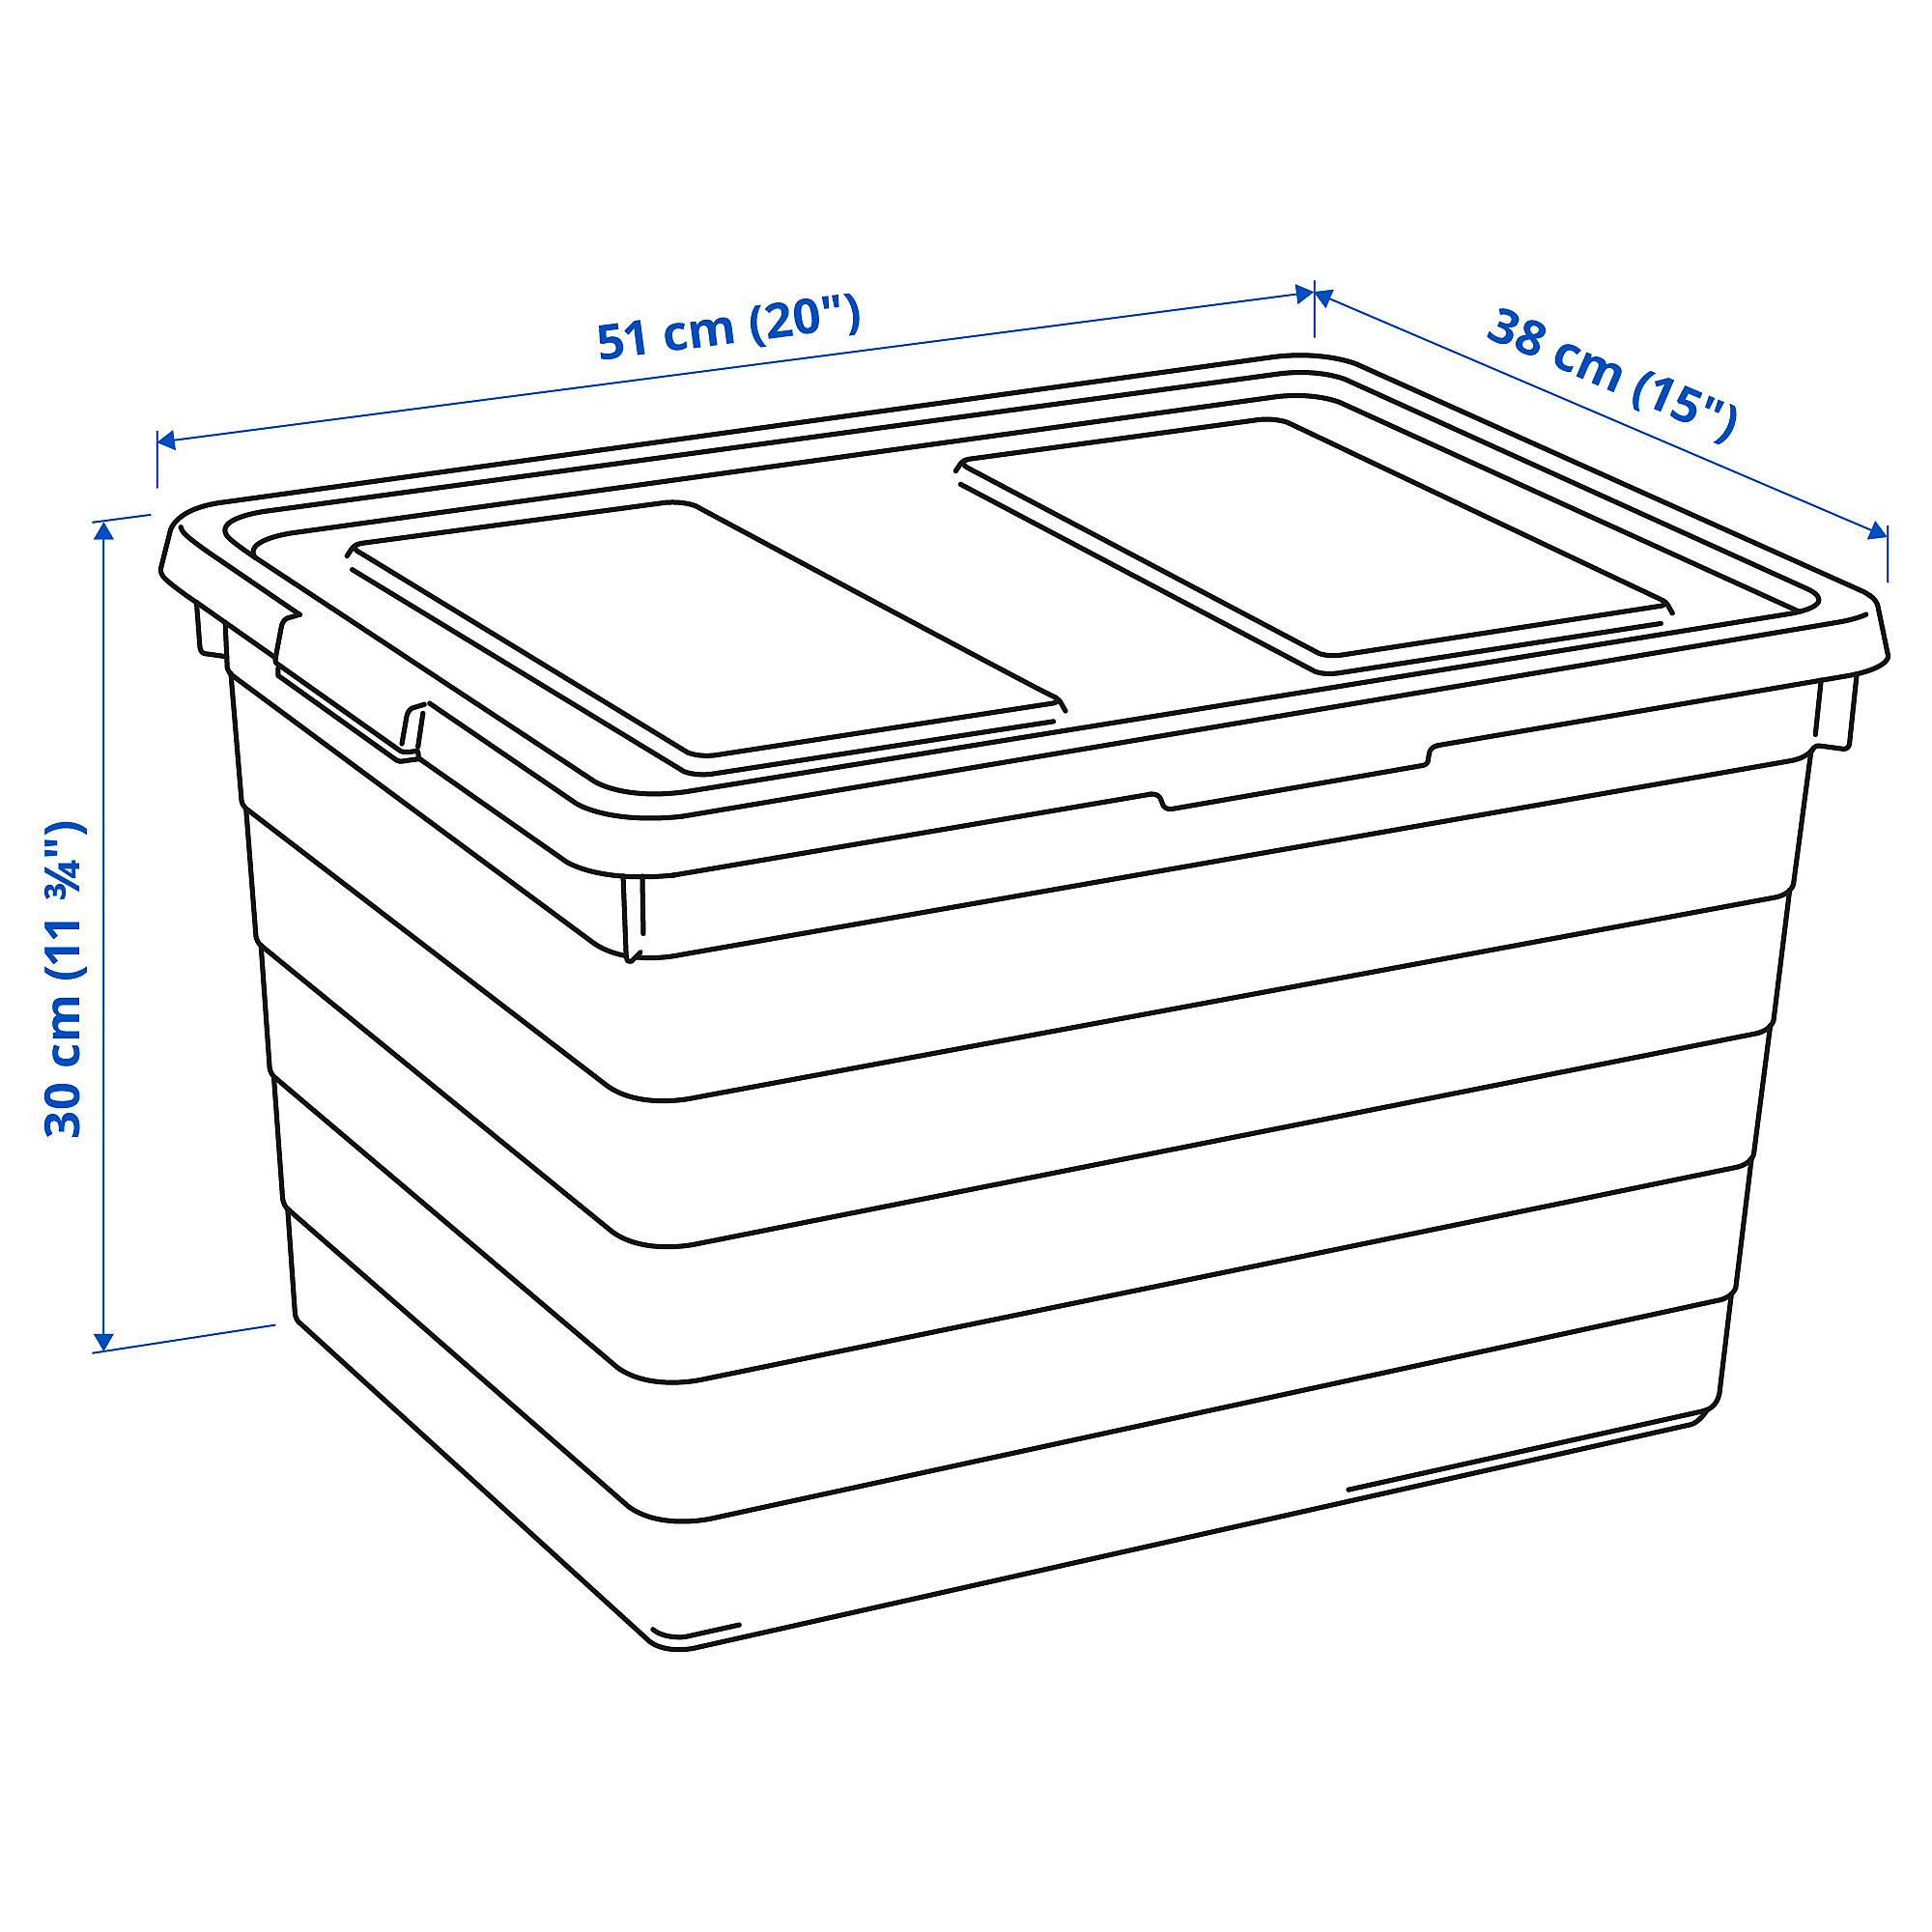 SOCKERBIT box with lid